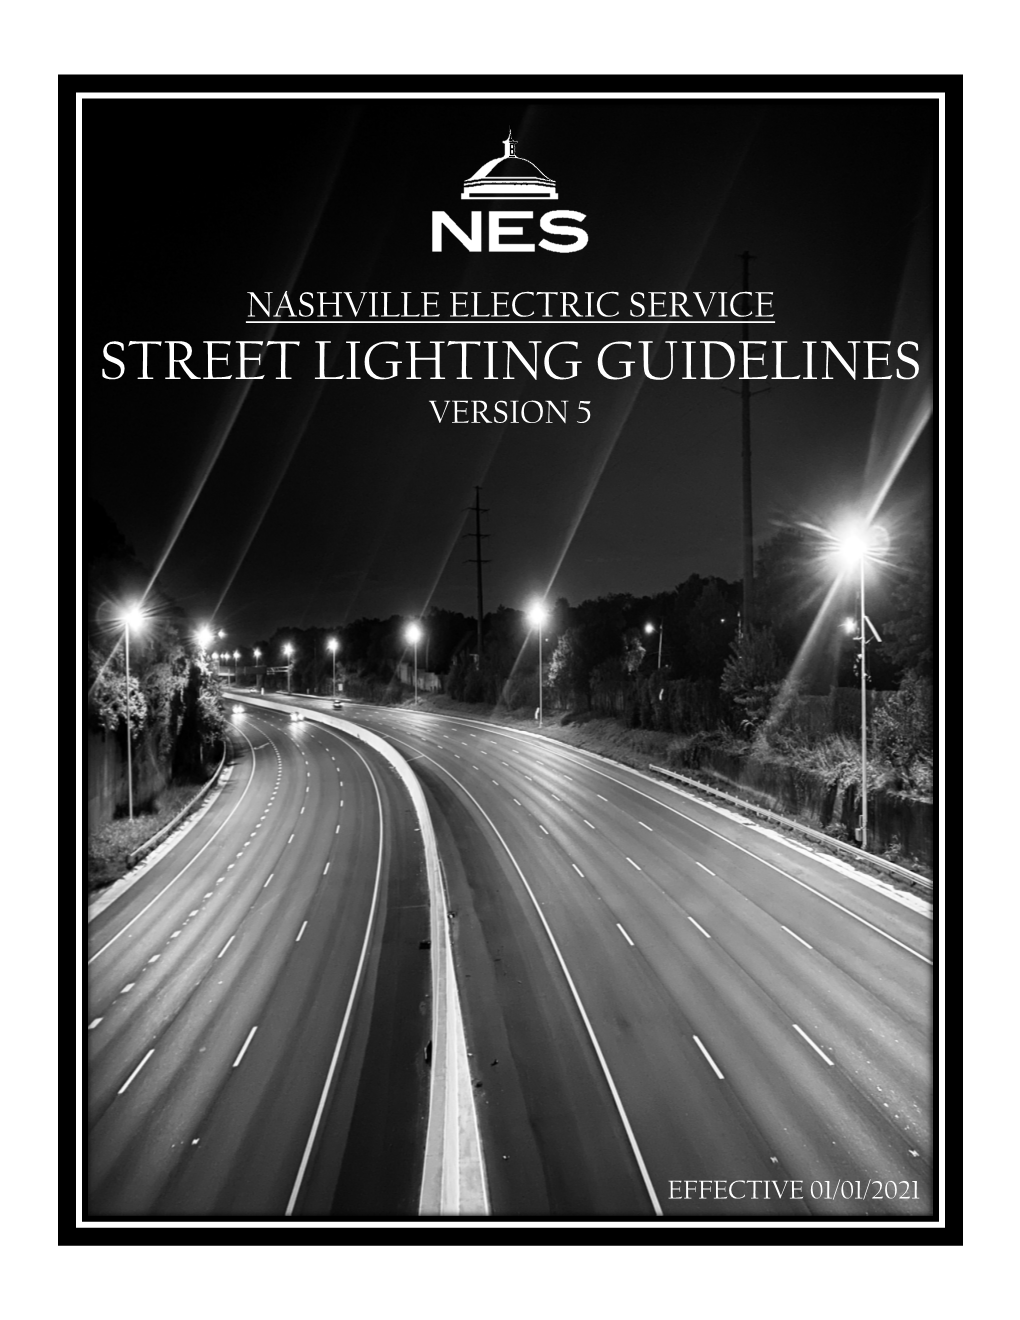 Street Lighting Guidelines Version 5